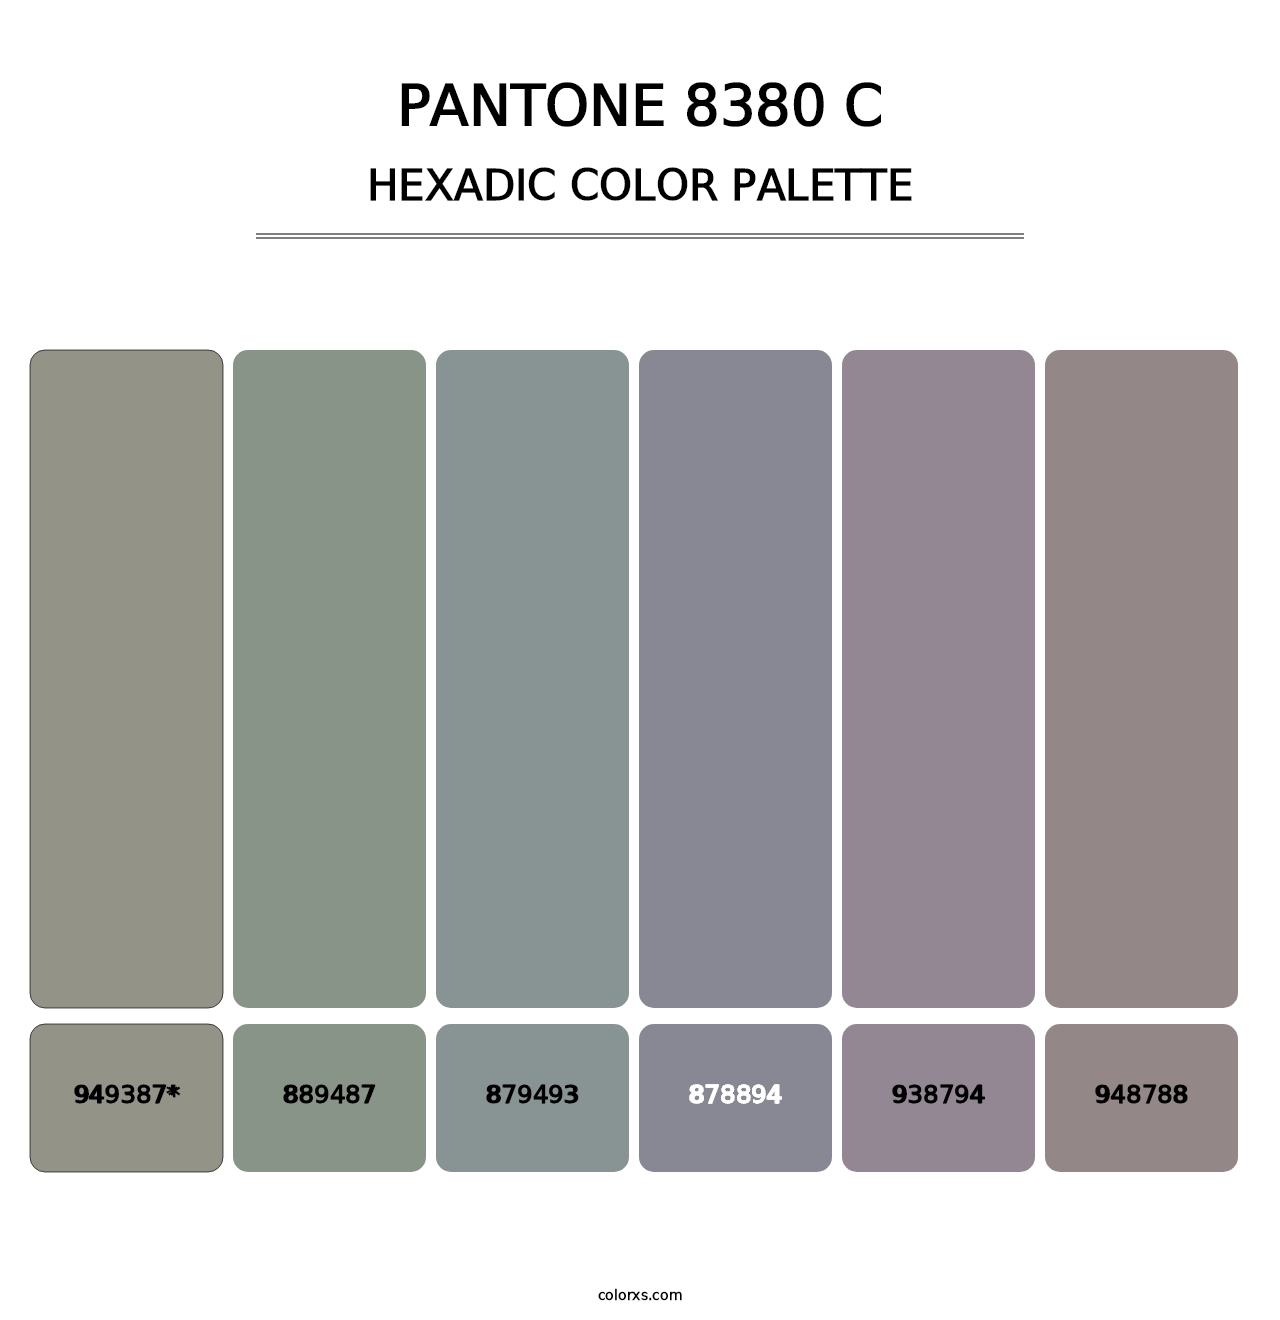 PANTONE 8380 C - Hexadic Color Palette